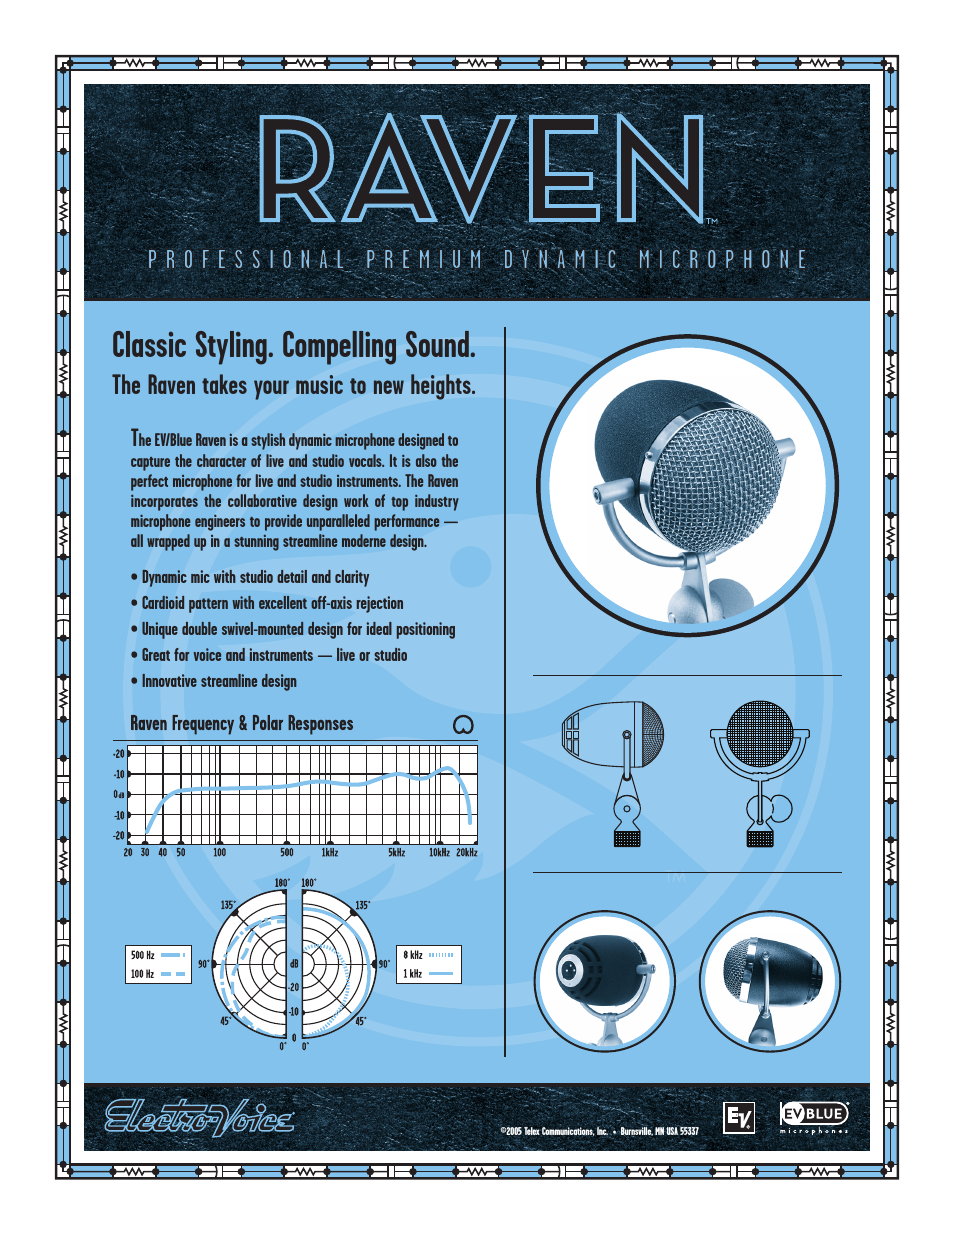 Raven Professional Premium Dynamic Microphone